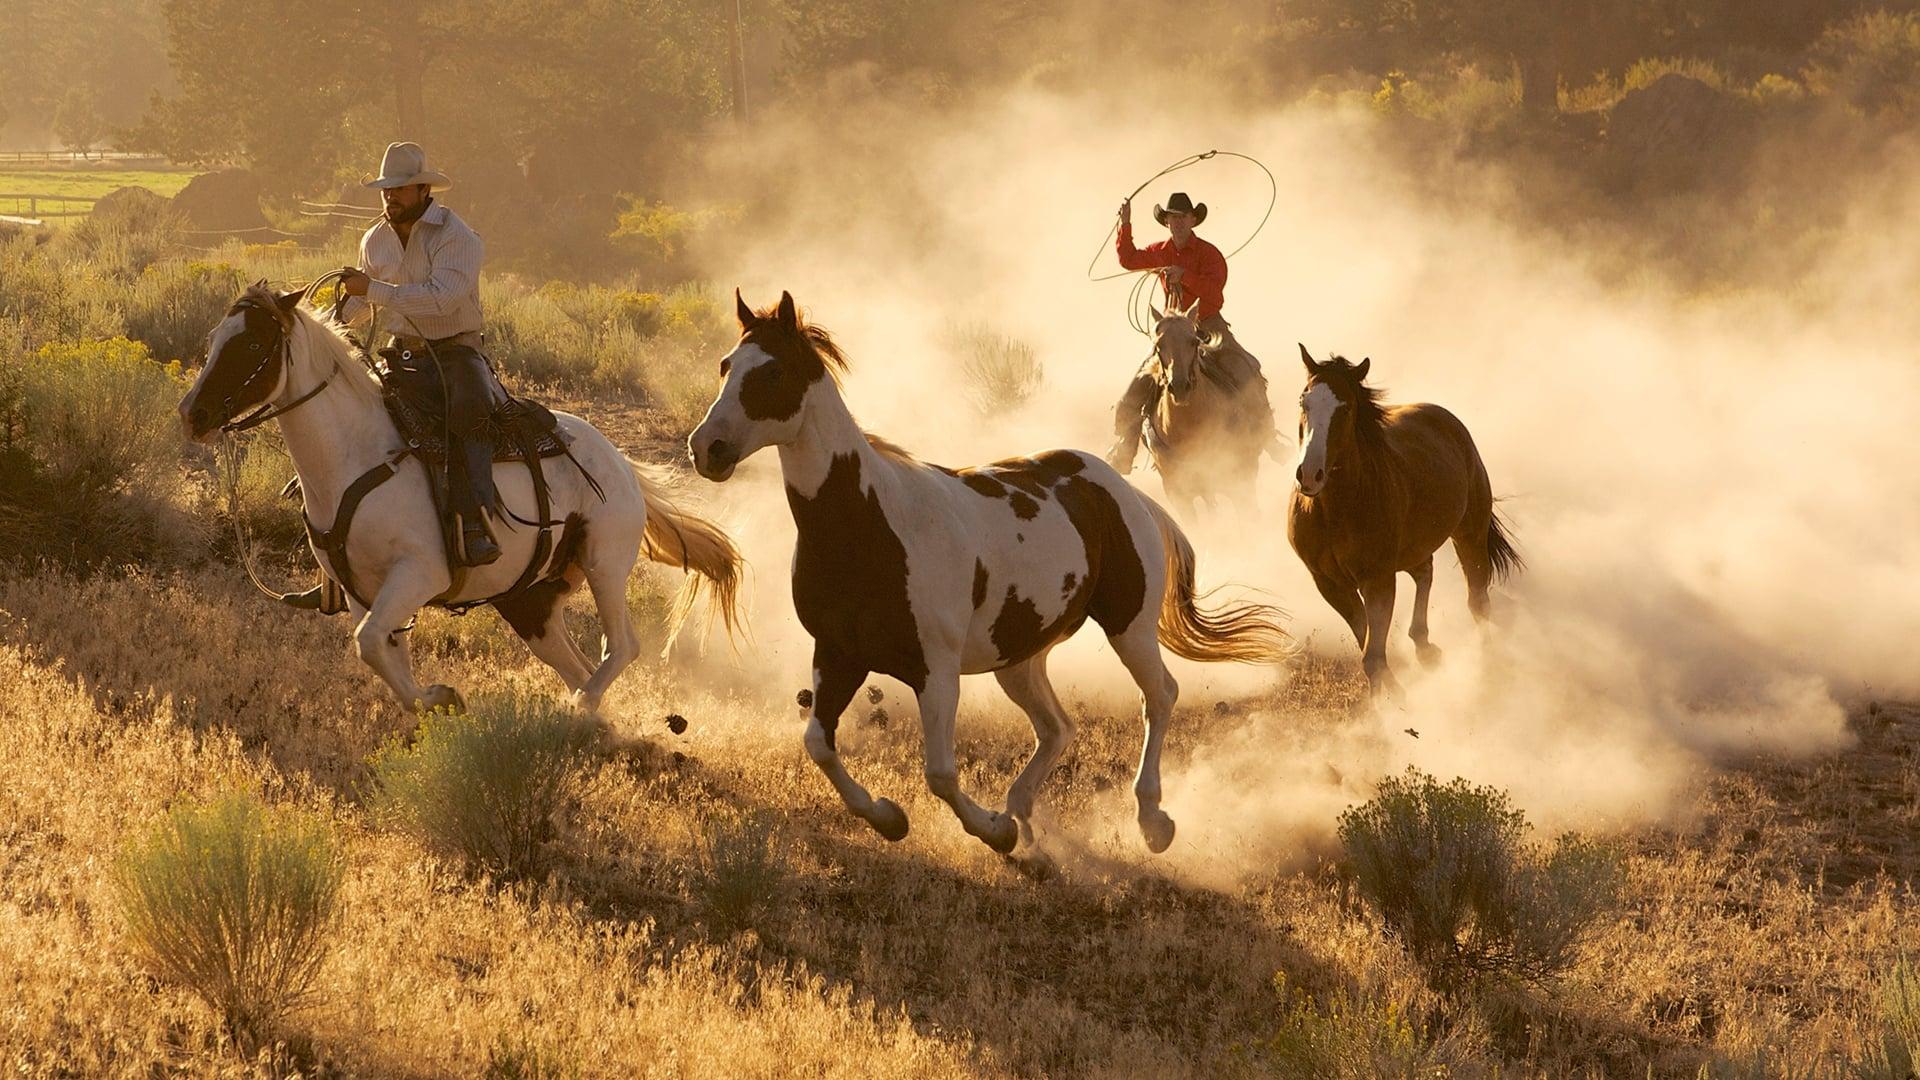 Wild West: America's Great Frontier backdrop